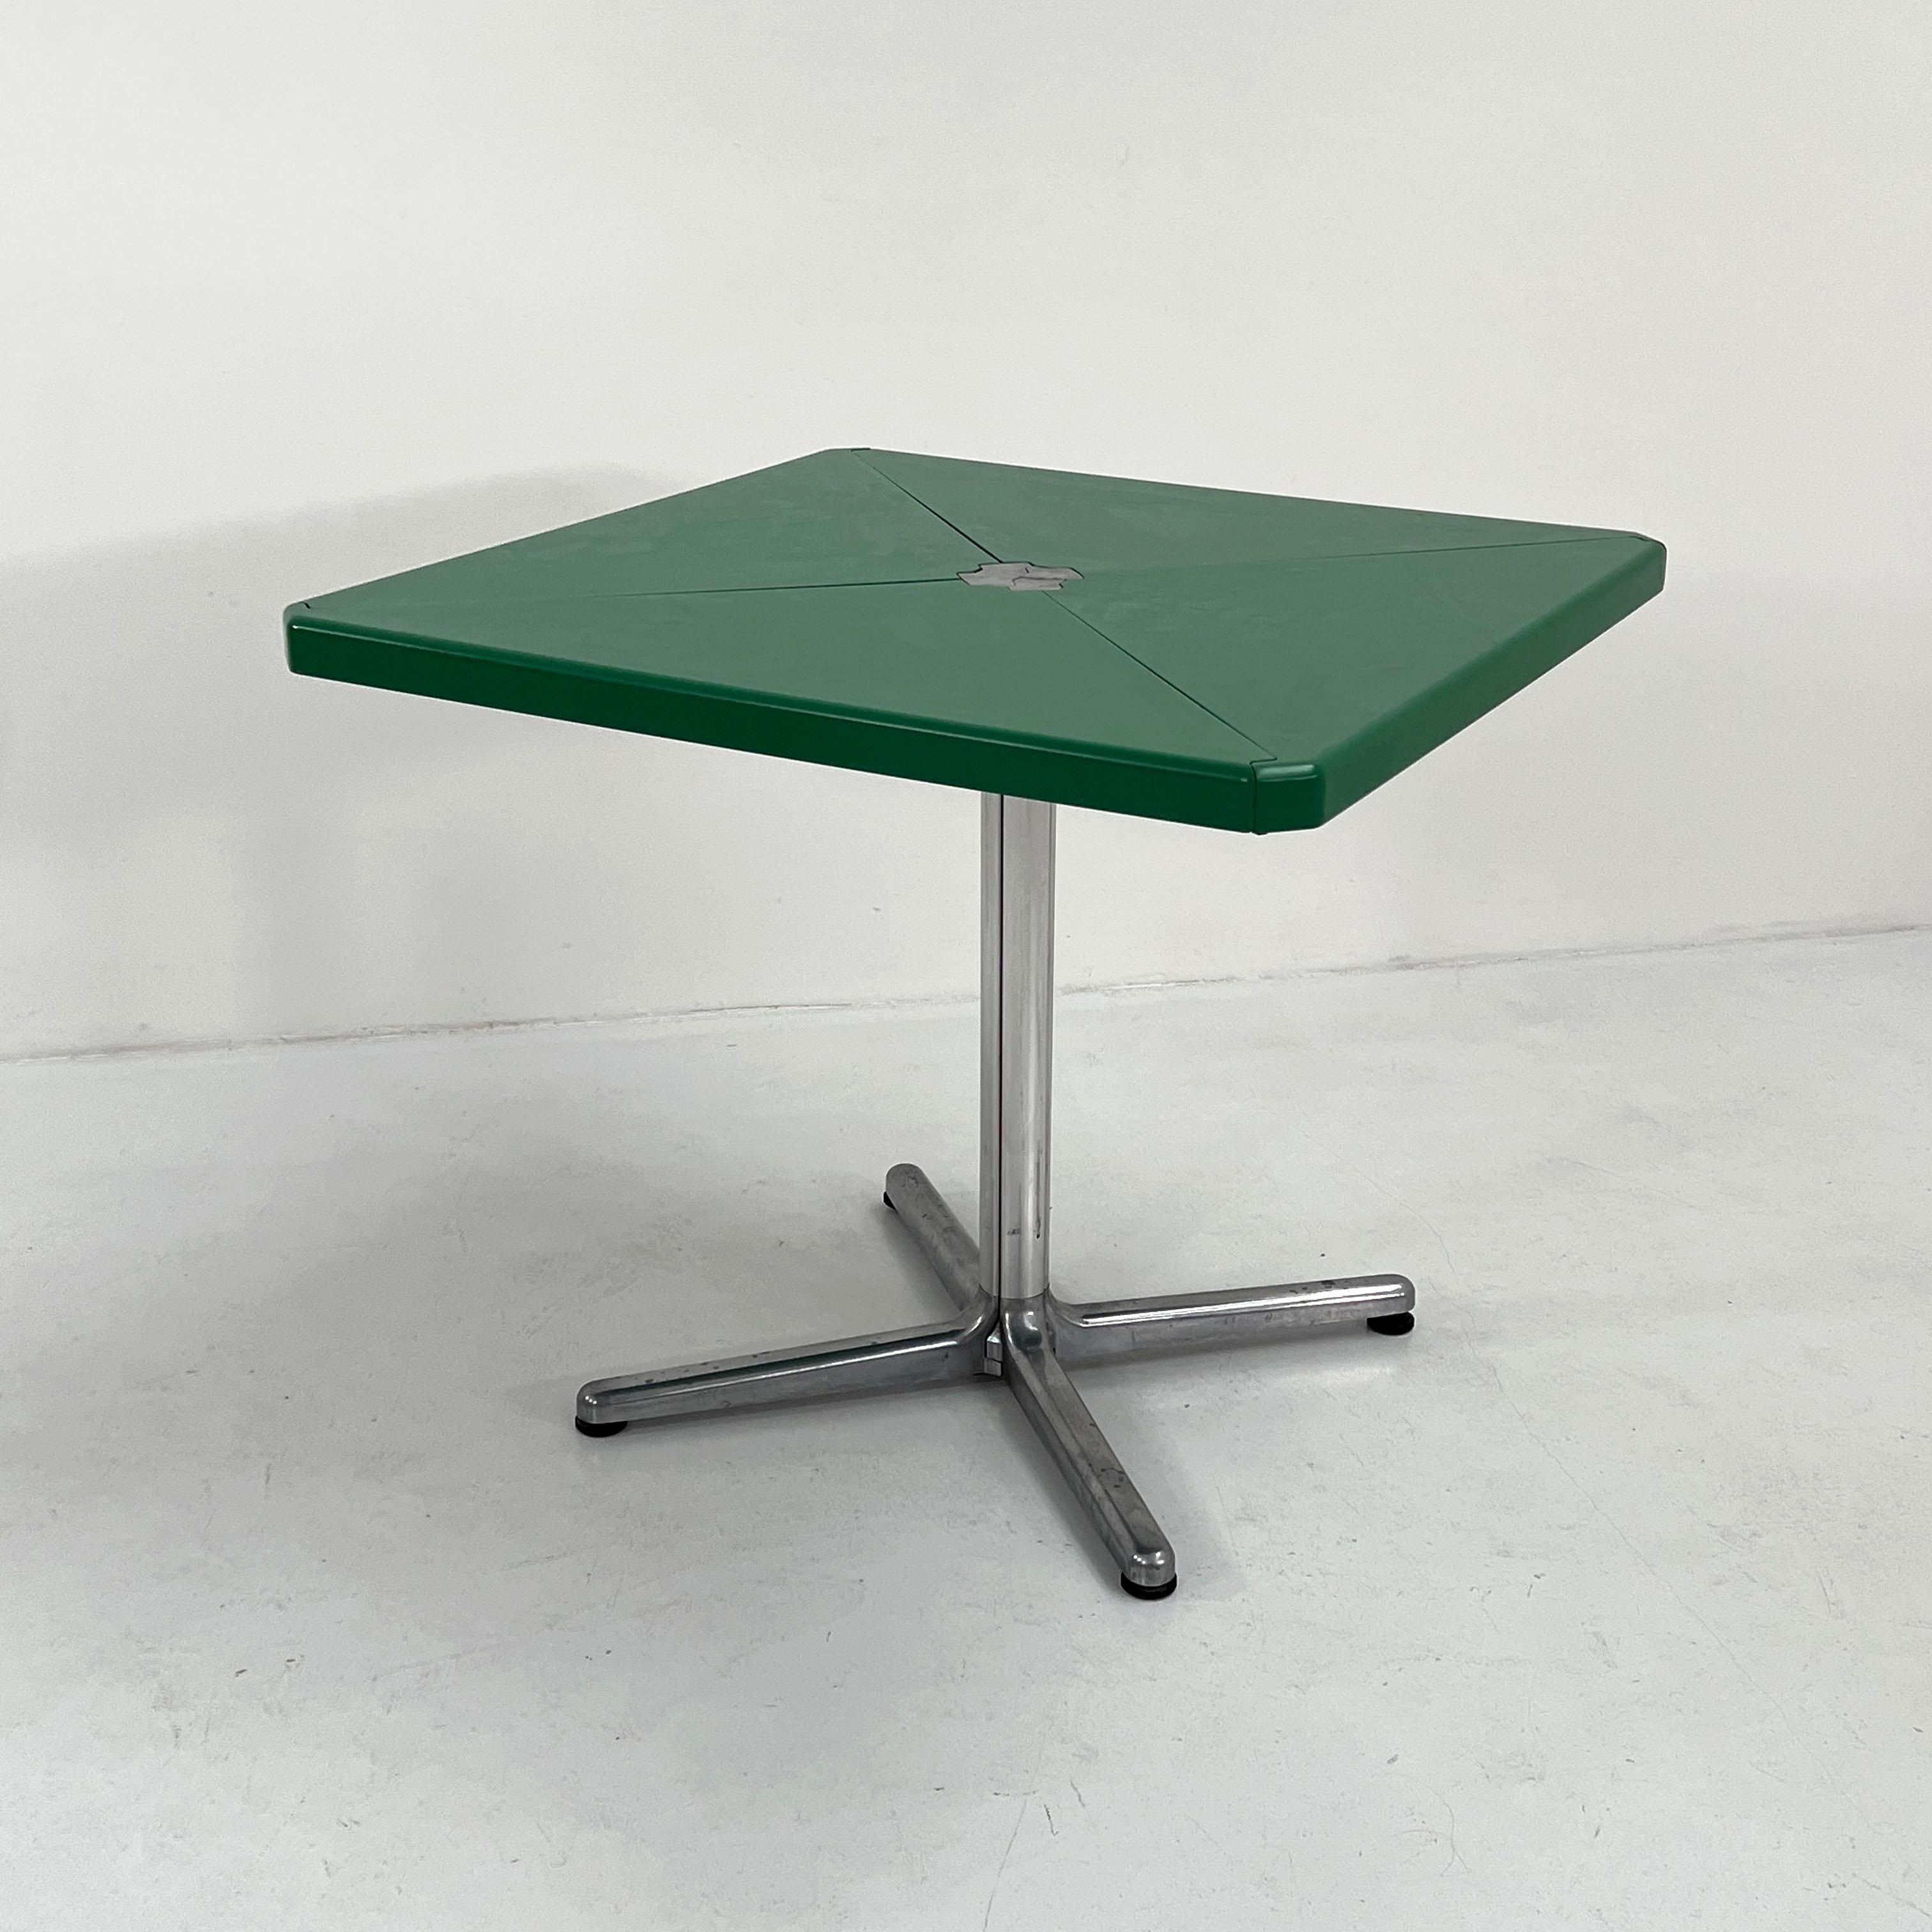 Designer - Giancarlo Piretti
Producer - Anonima Castelli
Model - Plana Folding Table 
Design Period - Seventies
Measurements - Width 113 cm x Depth 113 cm x Height 72 cm / Folded Width 60 cm x Depth 18 cm x Height 72 cm
Materials - Perspex,